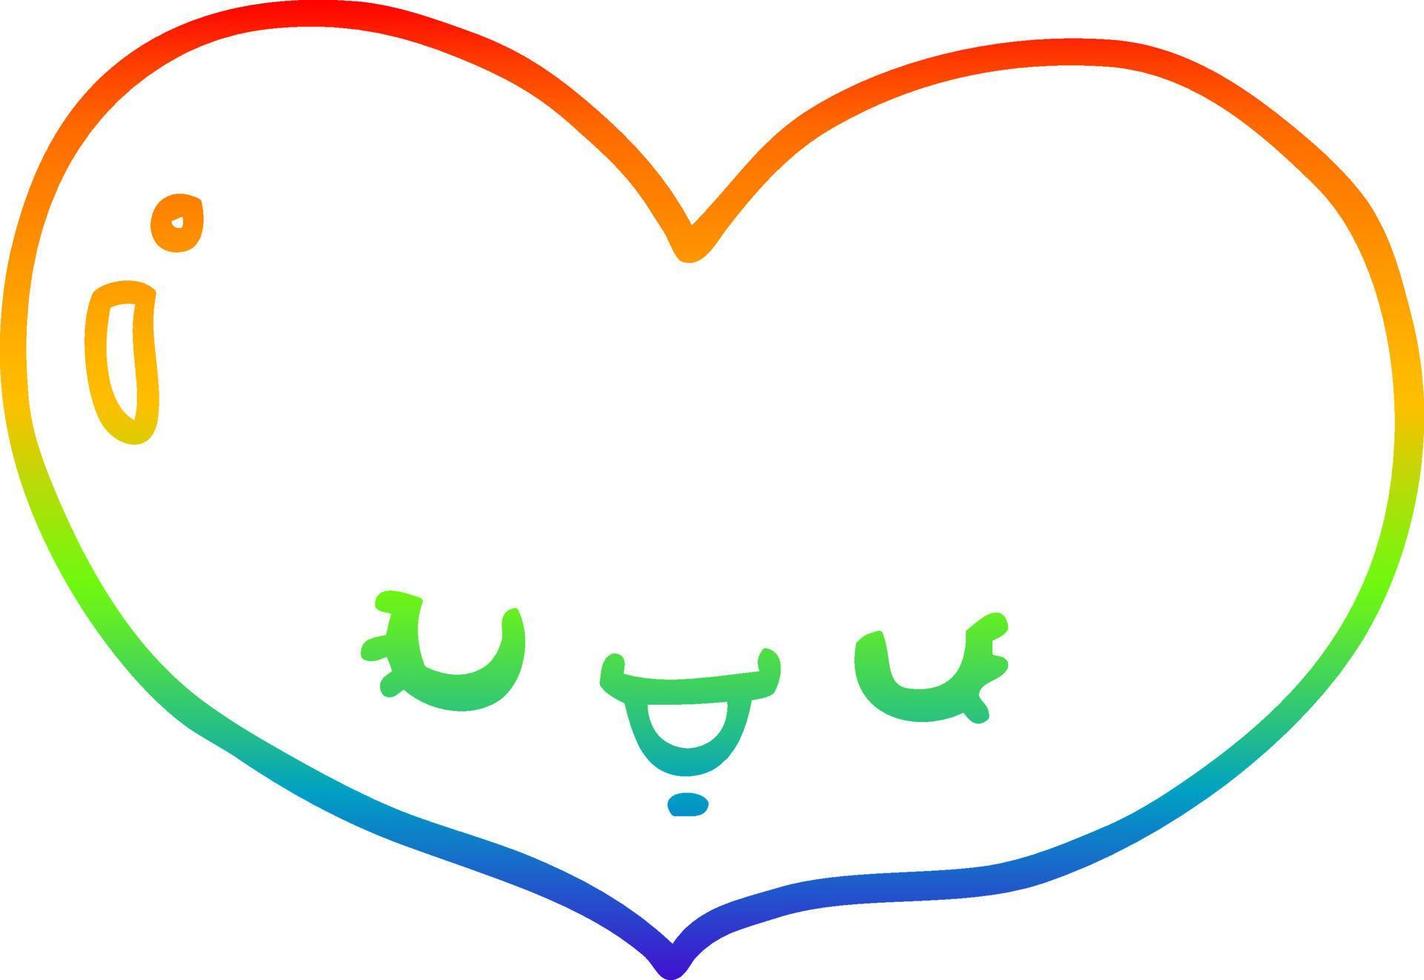 rainbow gradient line drawing cartoon love heart character vector